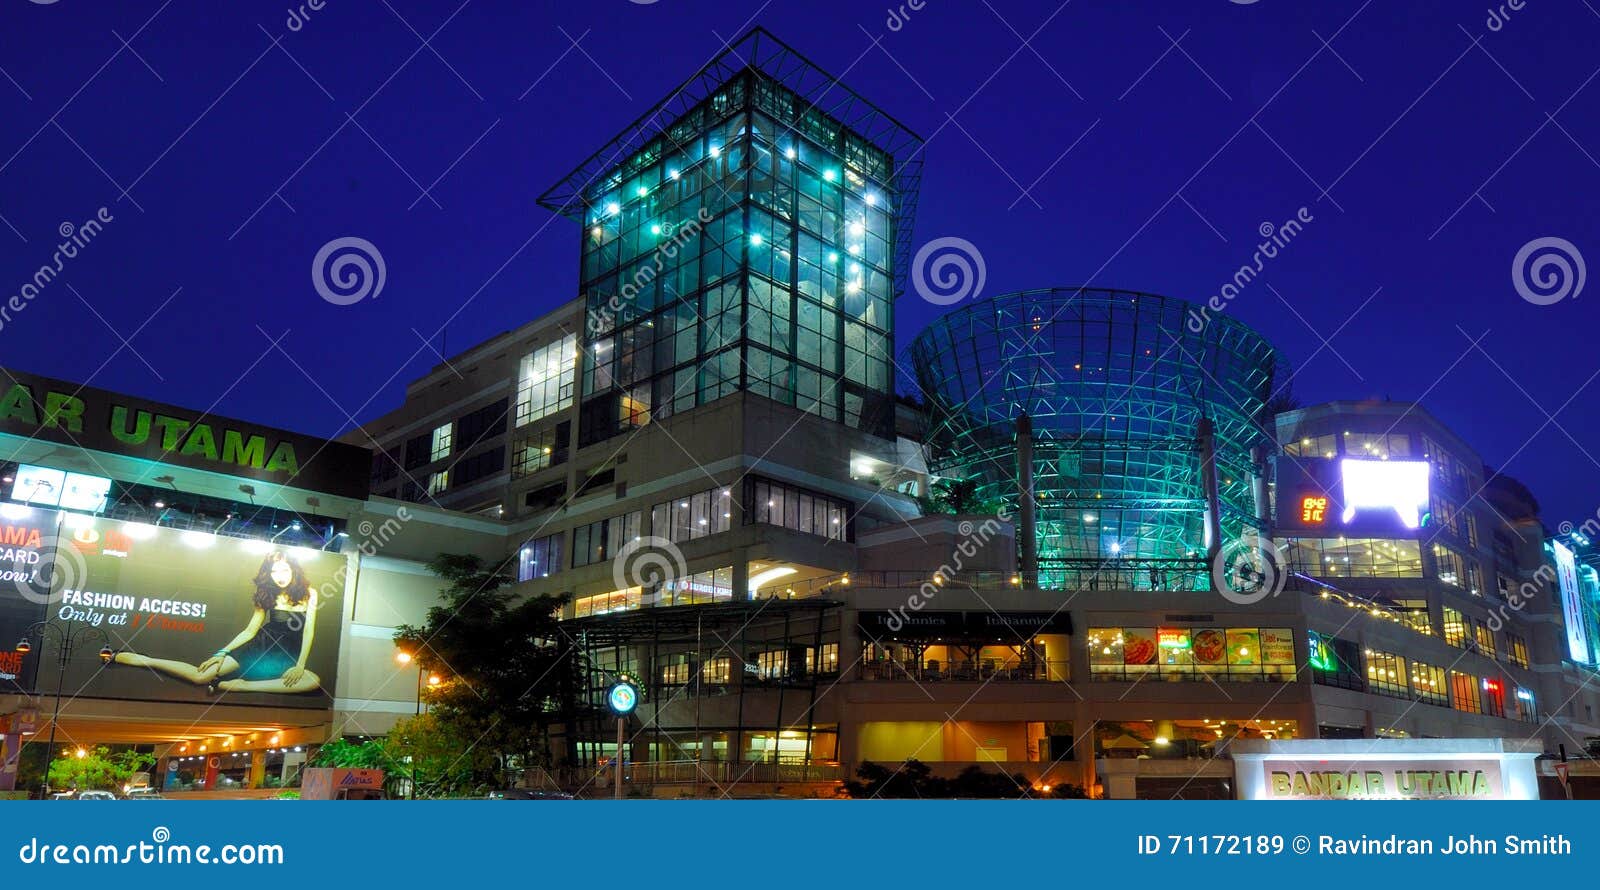 1 Utama Shopping Mall editorial stock image. Image of ...